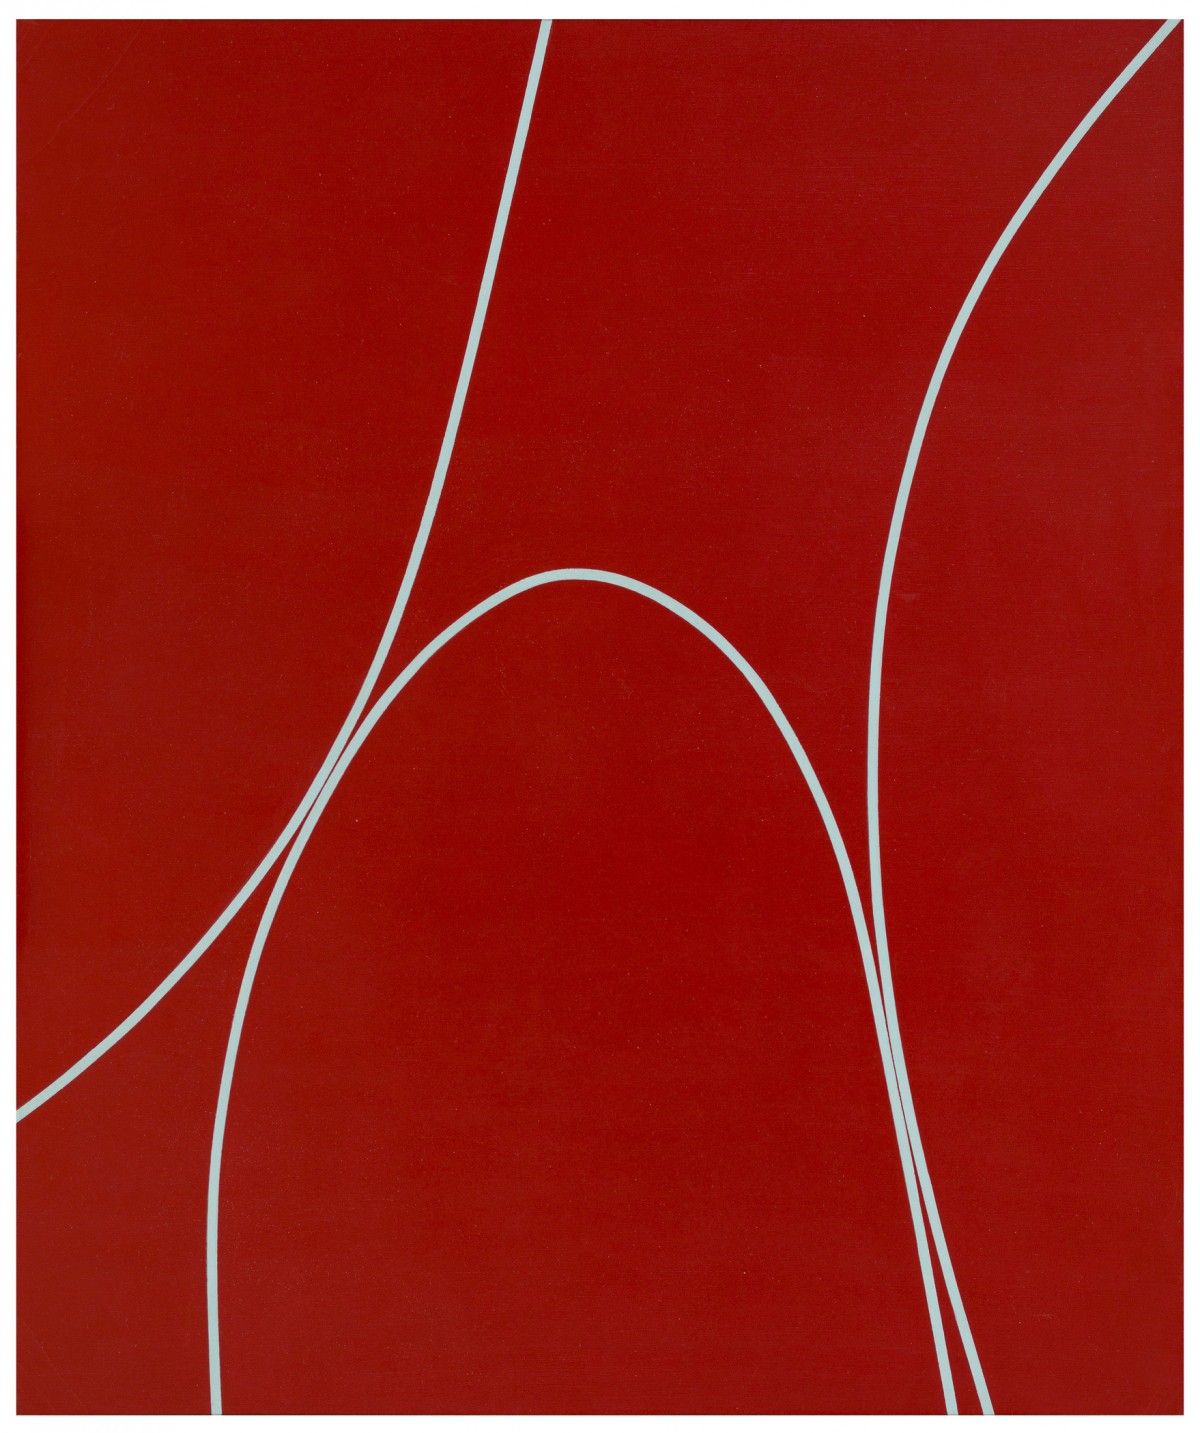 Image: Lorser Feitelson, Hardedge Line Painting, 1963